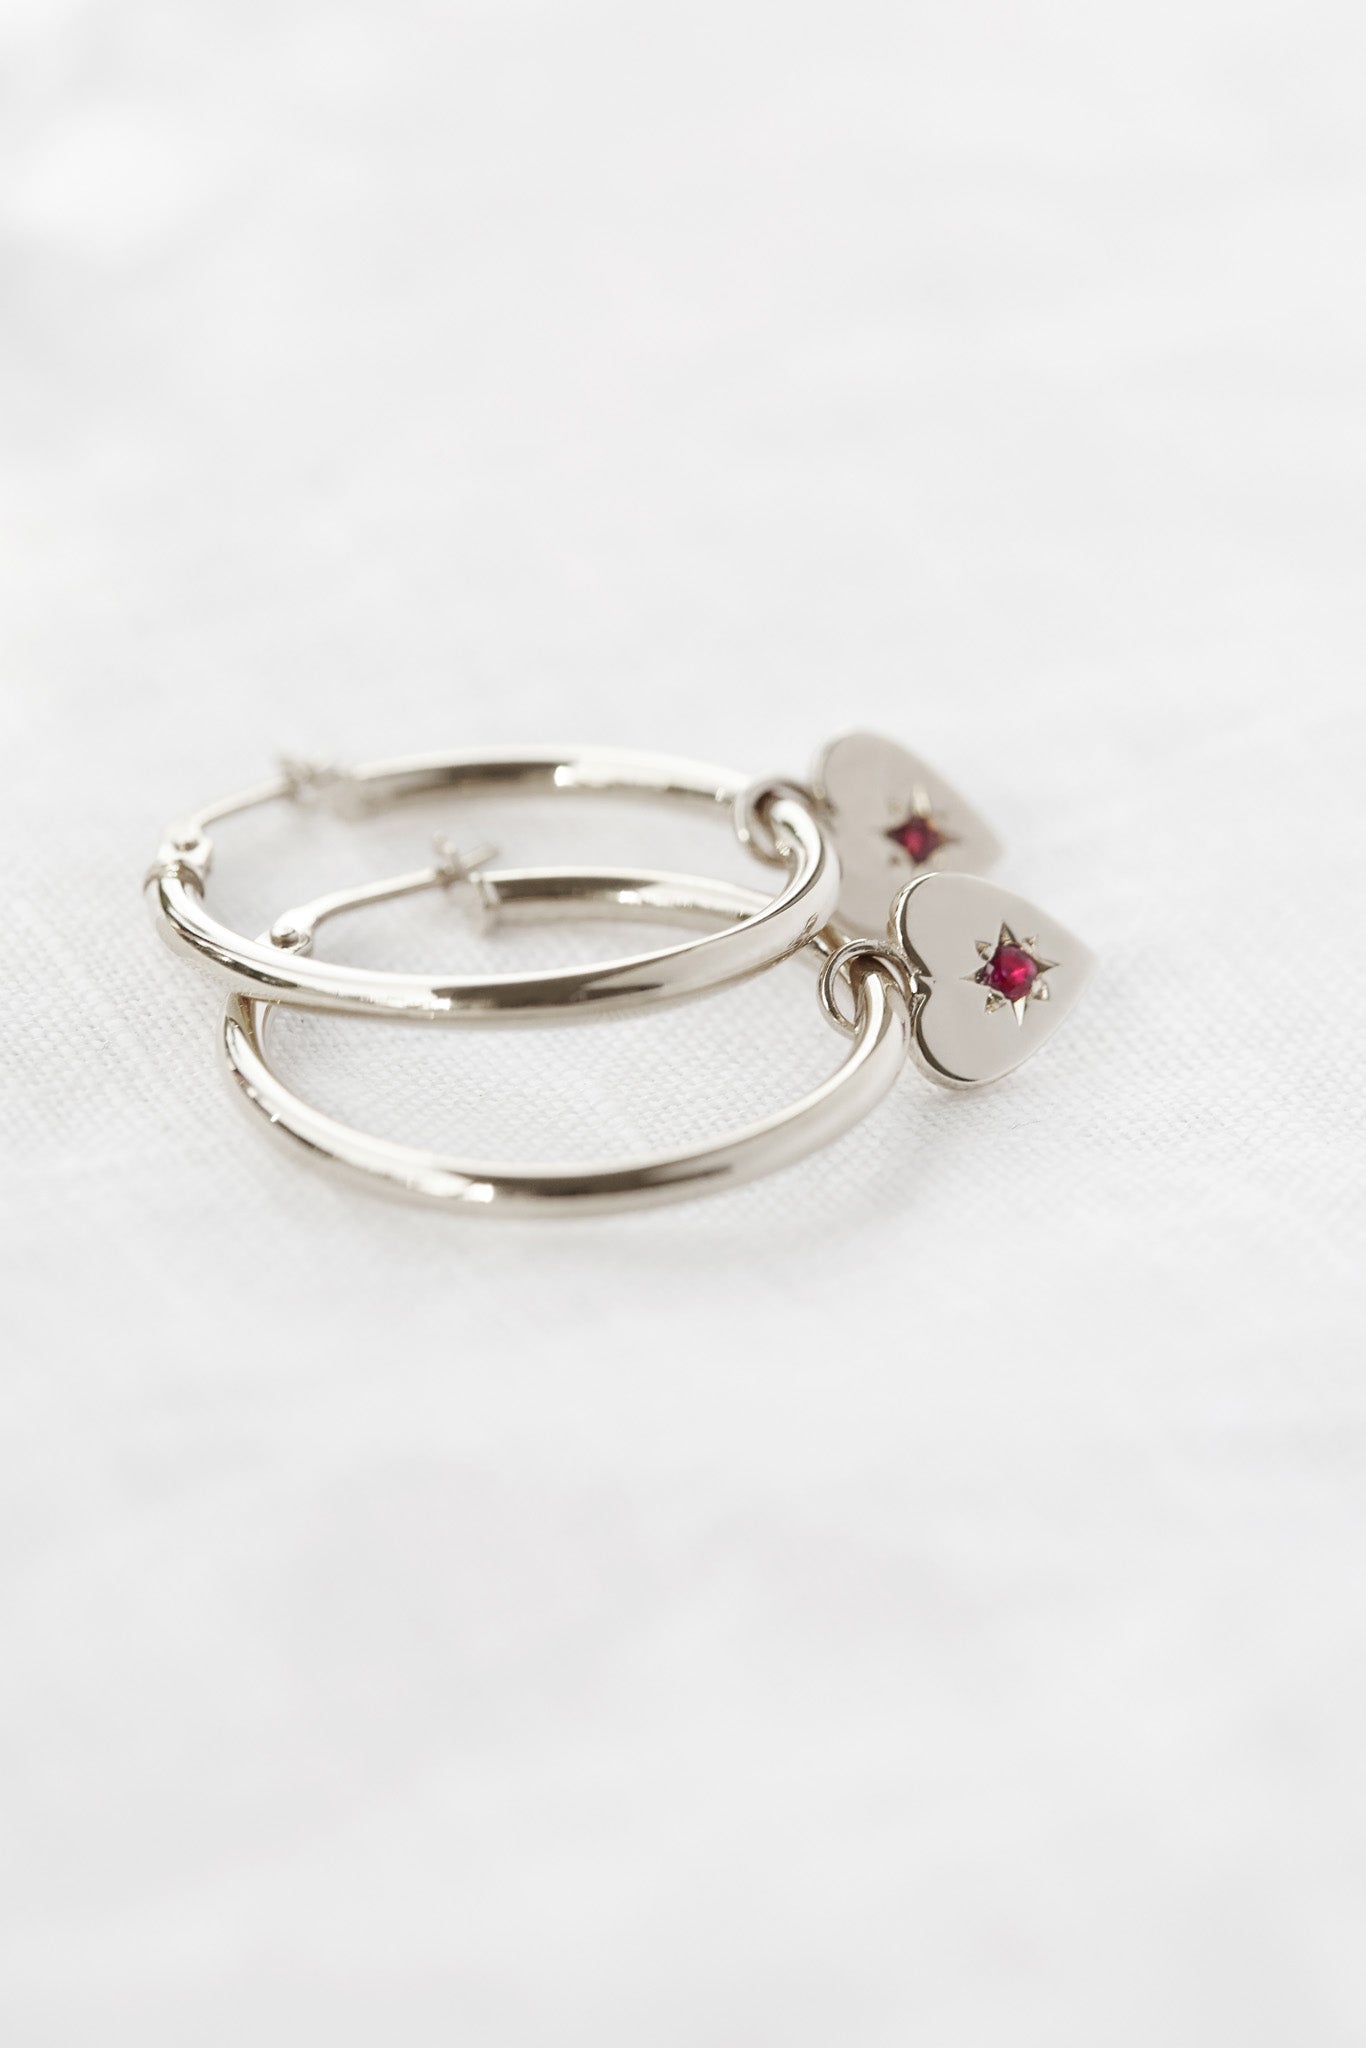 Jolie Ruby Heart Hoop Earrings in 925 Sterling Silver